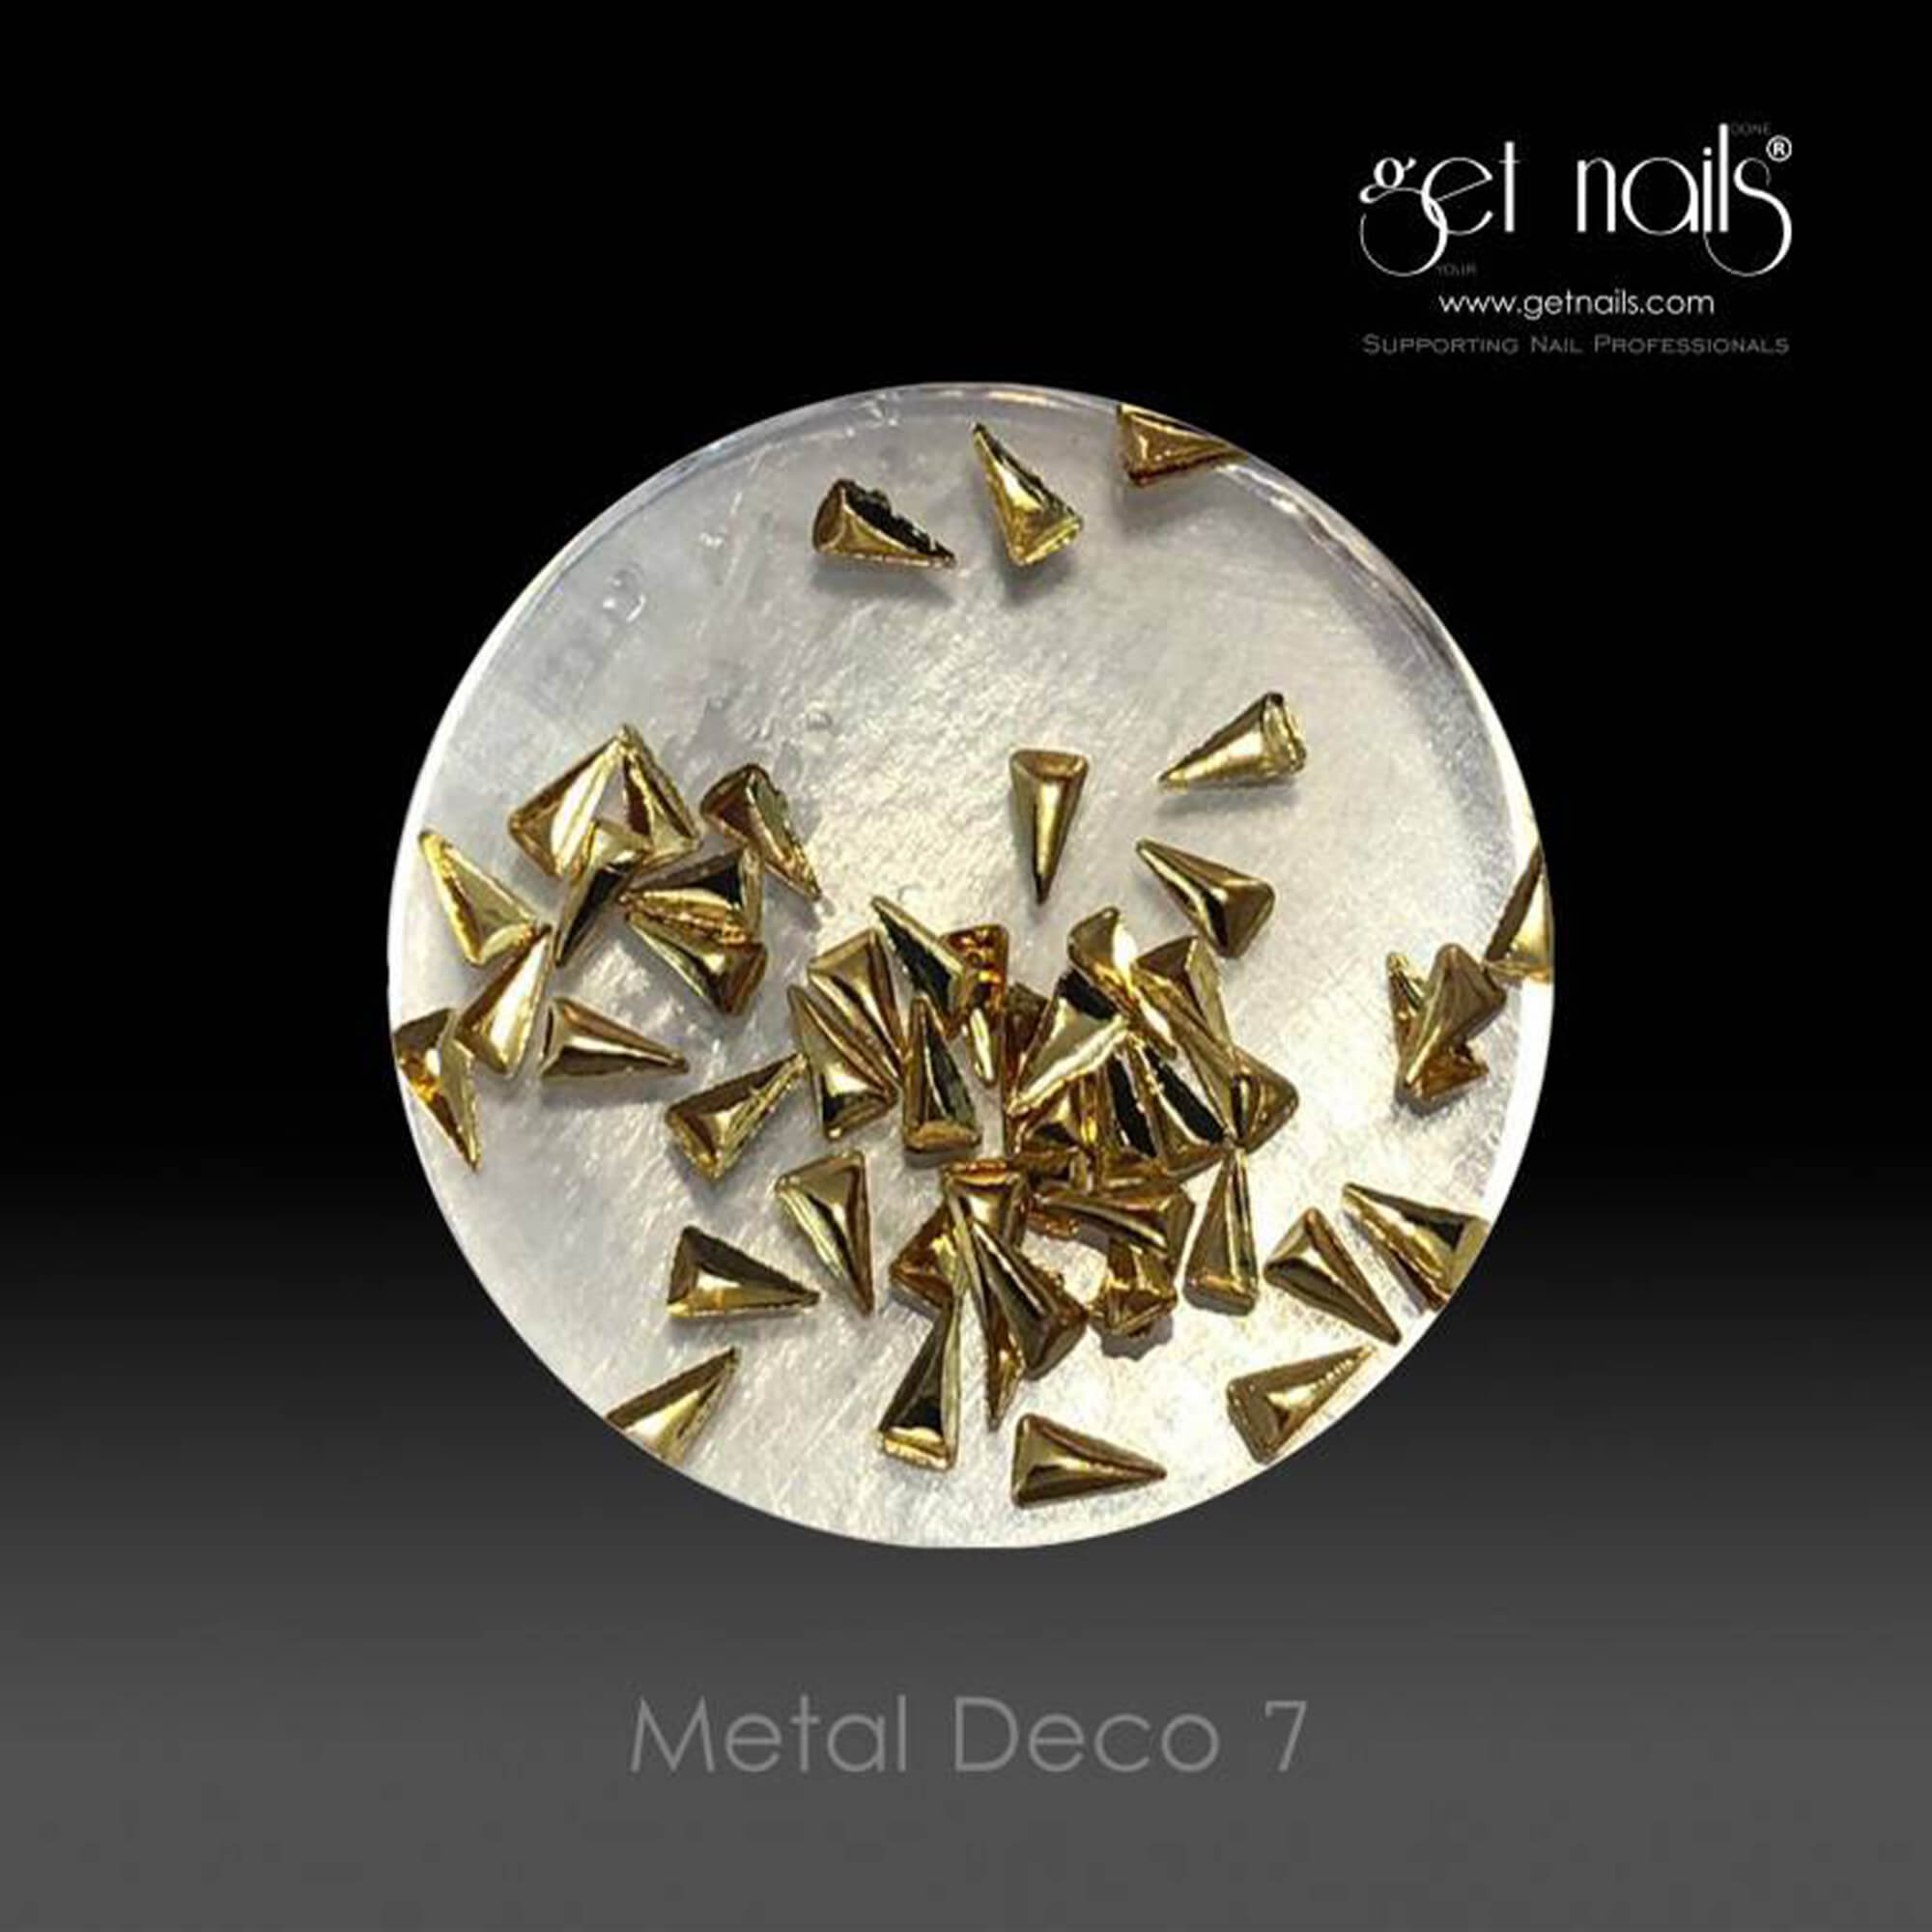 Get Nails Austria - Metal Deco 7 Gold, 50 Stk